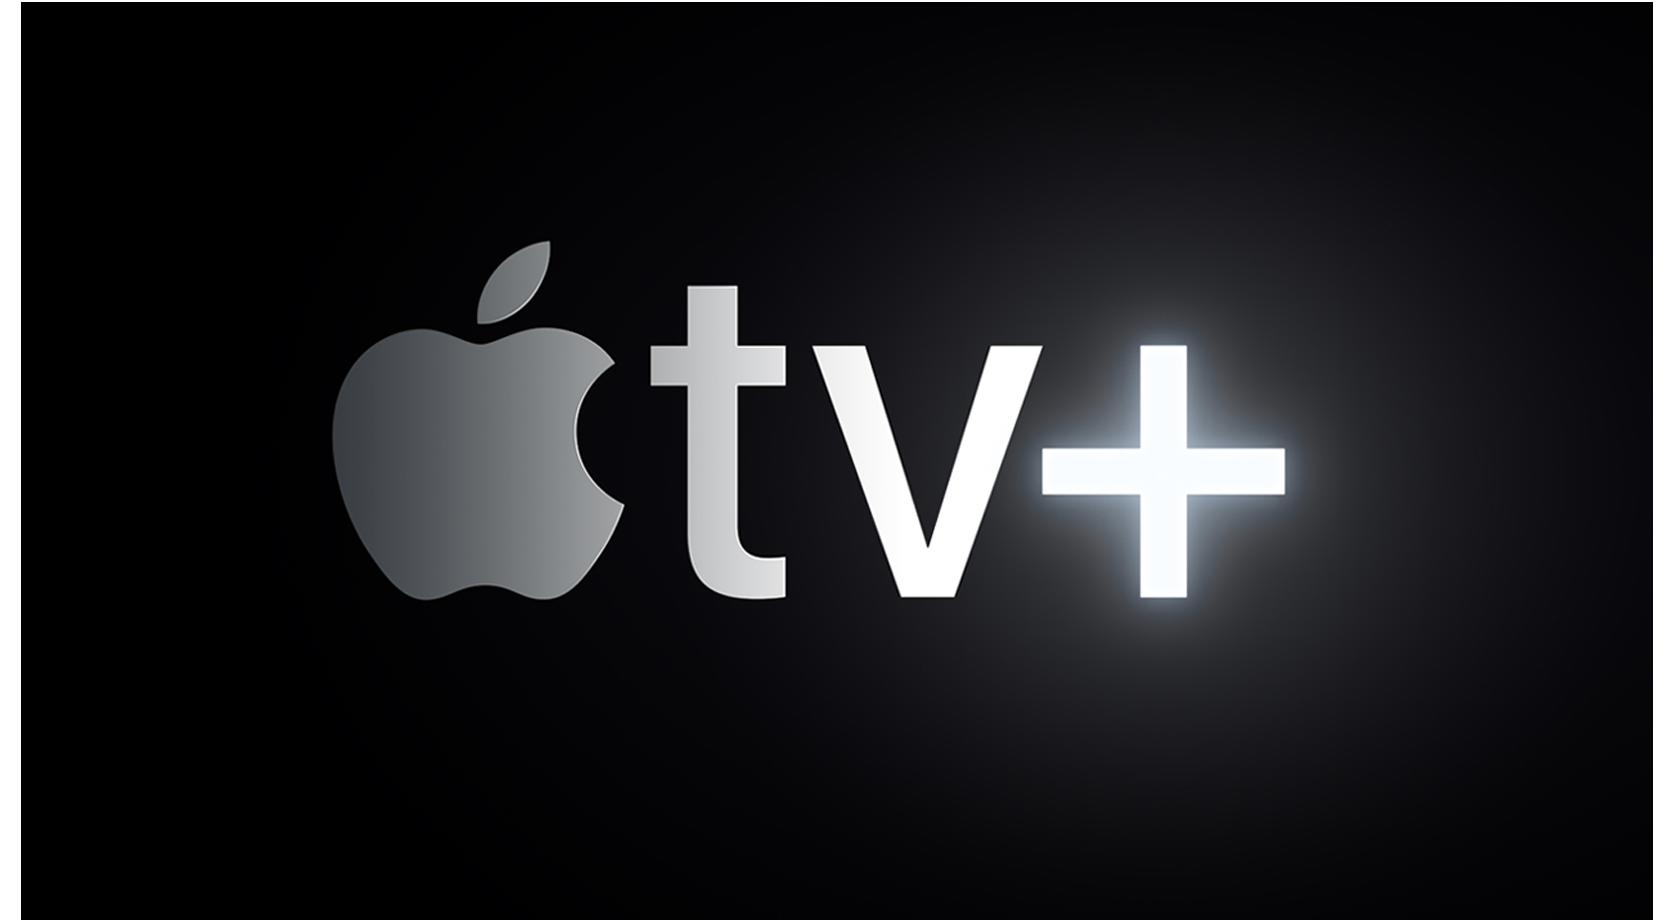 Apple unveils the Apple TV+